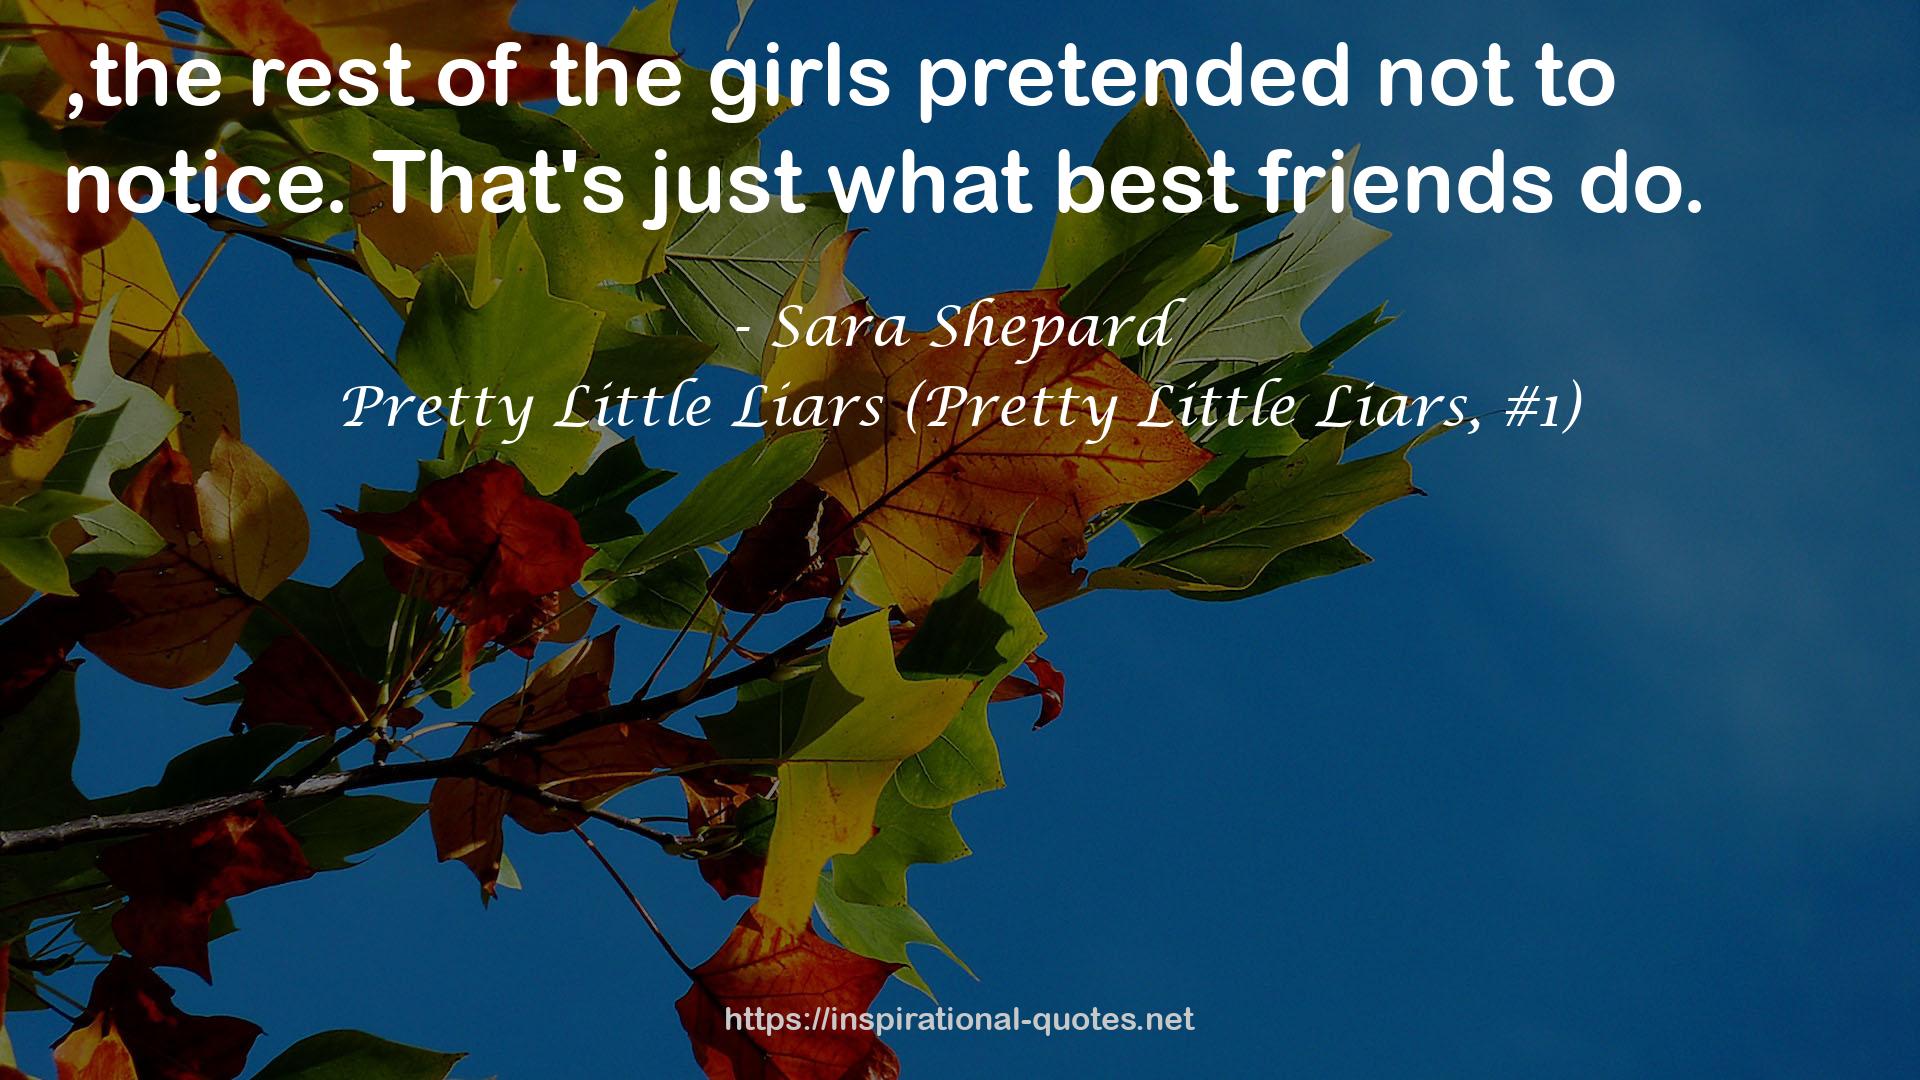 Pretty Little Liars (Pretty Little Liars, #1) QUOTES